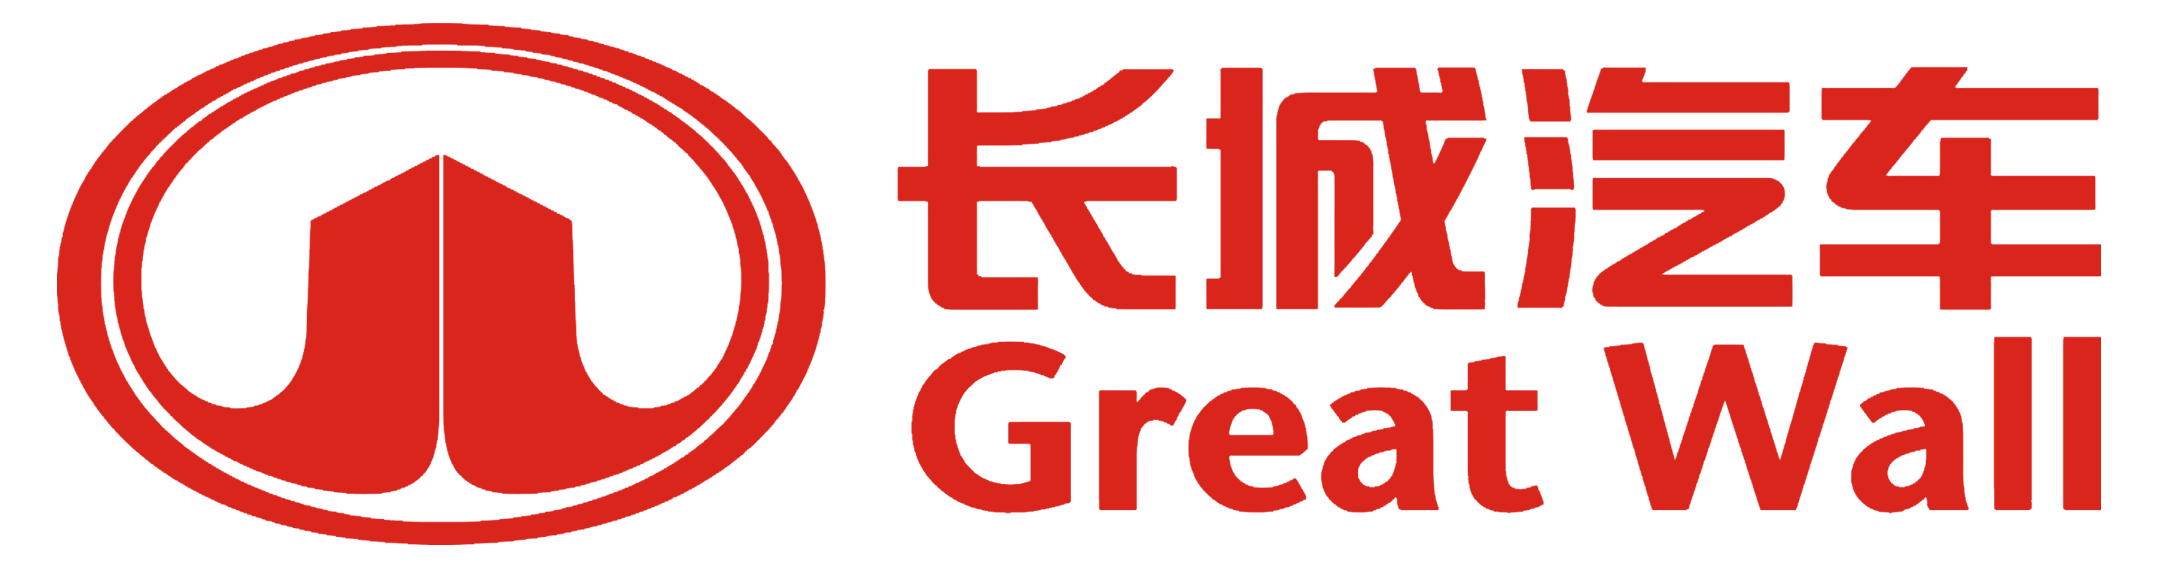 Great Wall Logo - File:Great Wall Motors logo 2.png - Wikimedia Commons